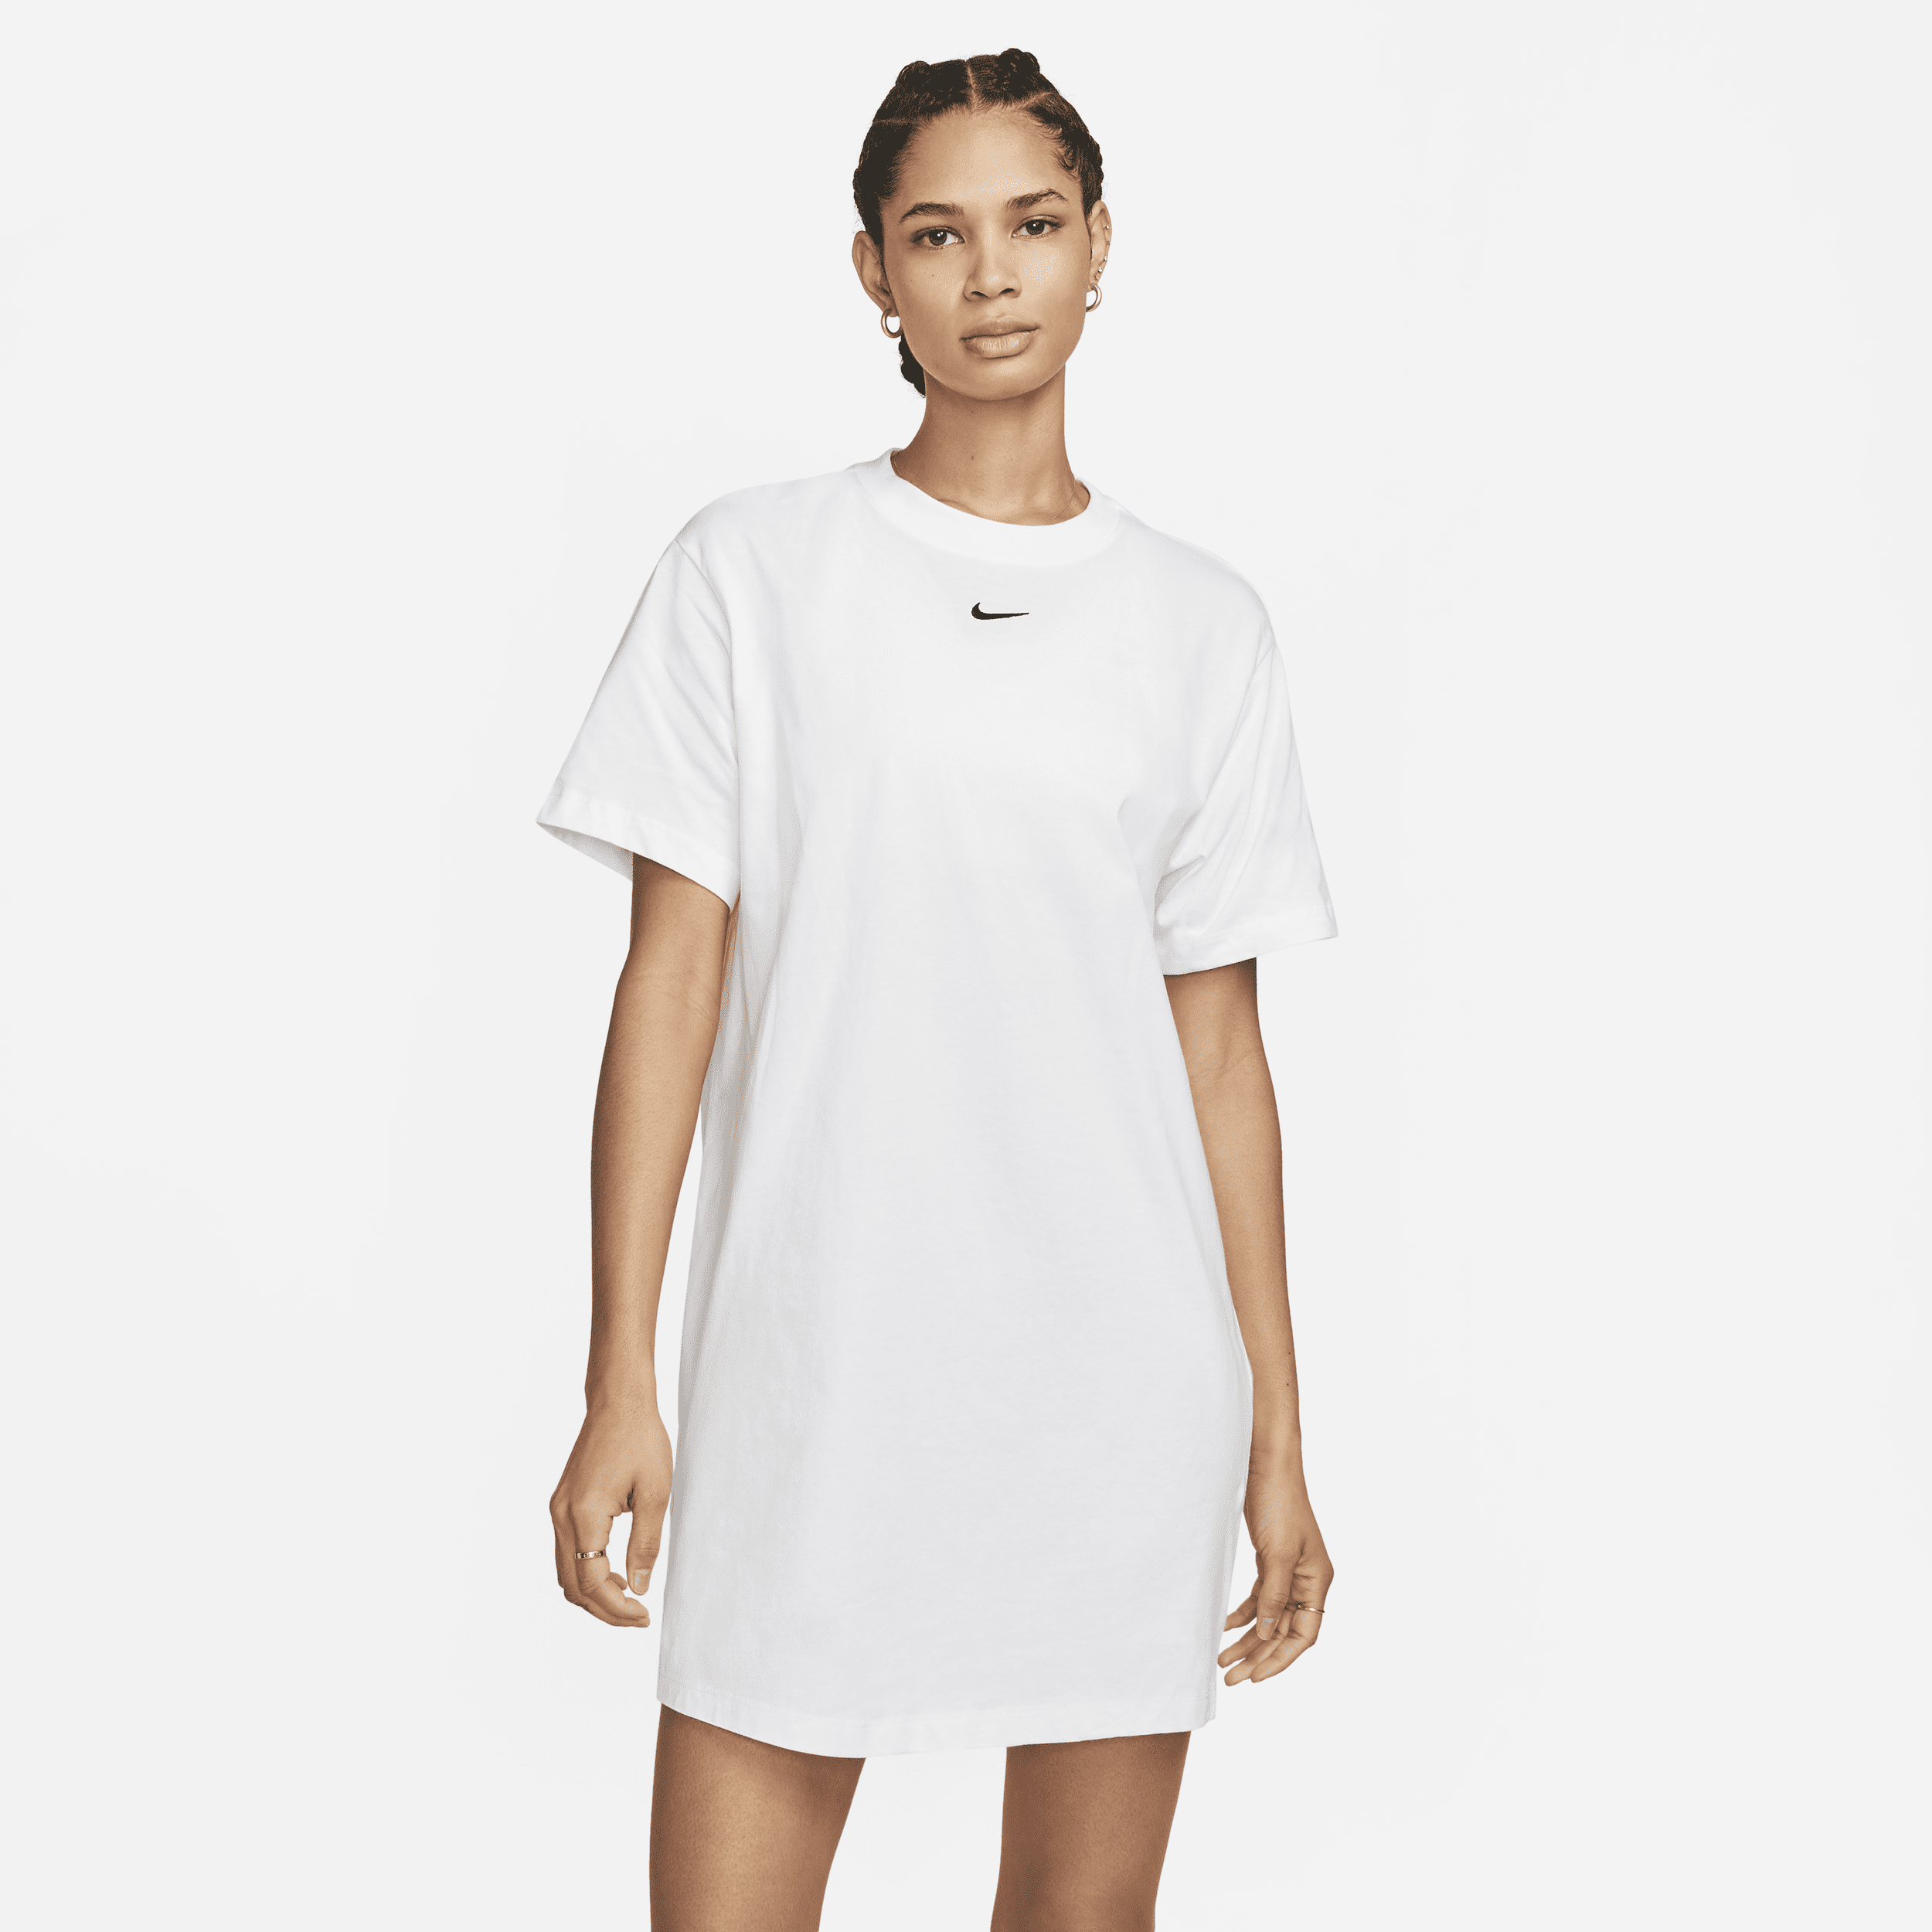 Oversized, maskinstrikket Nike Sportswear-T-shirt til kvinder - hvid